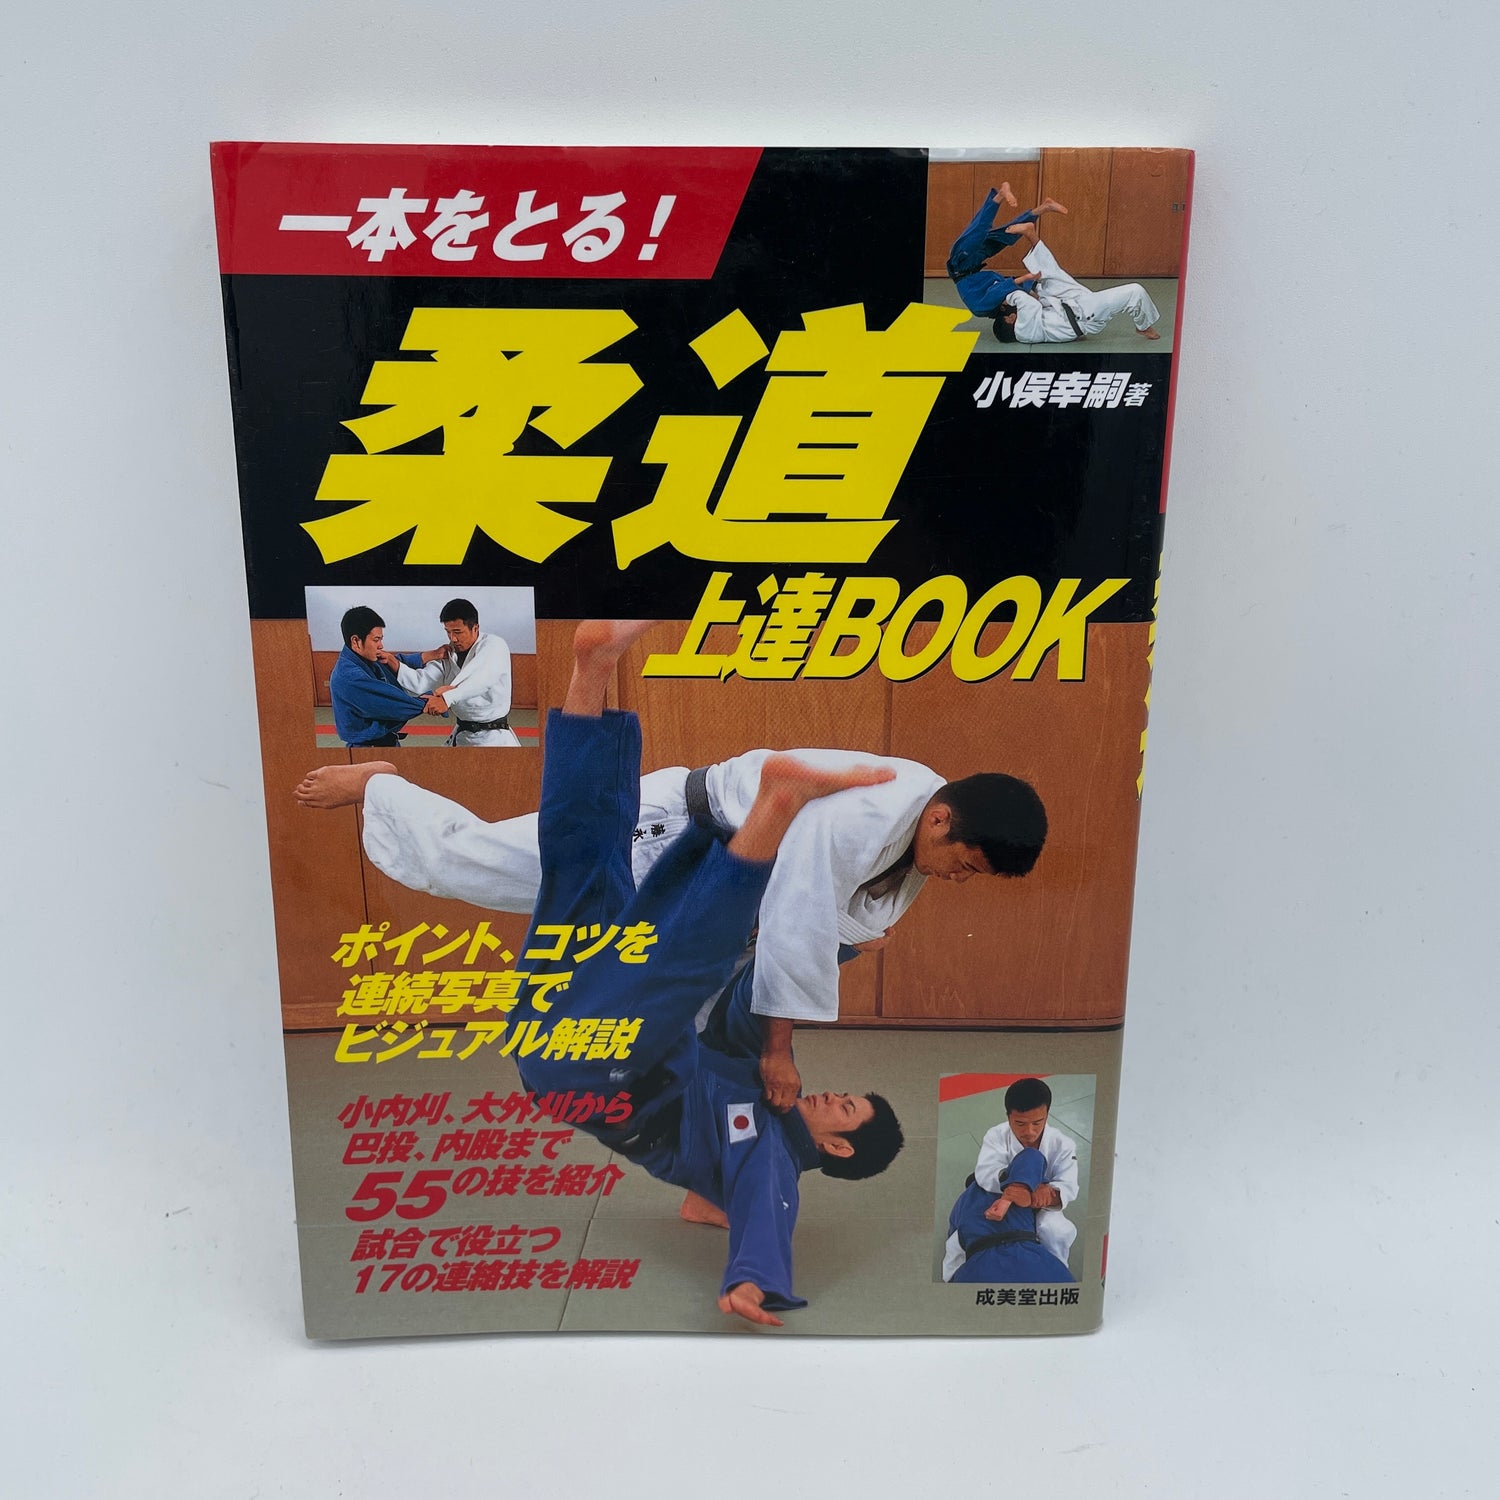 ¡Consigue el Ippon! Libro de mejora de judo de Koji Komata (usado)